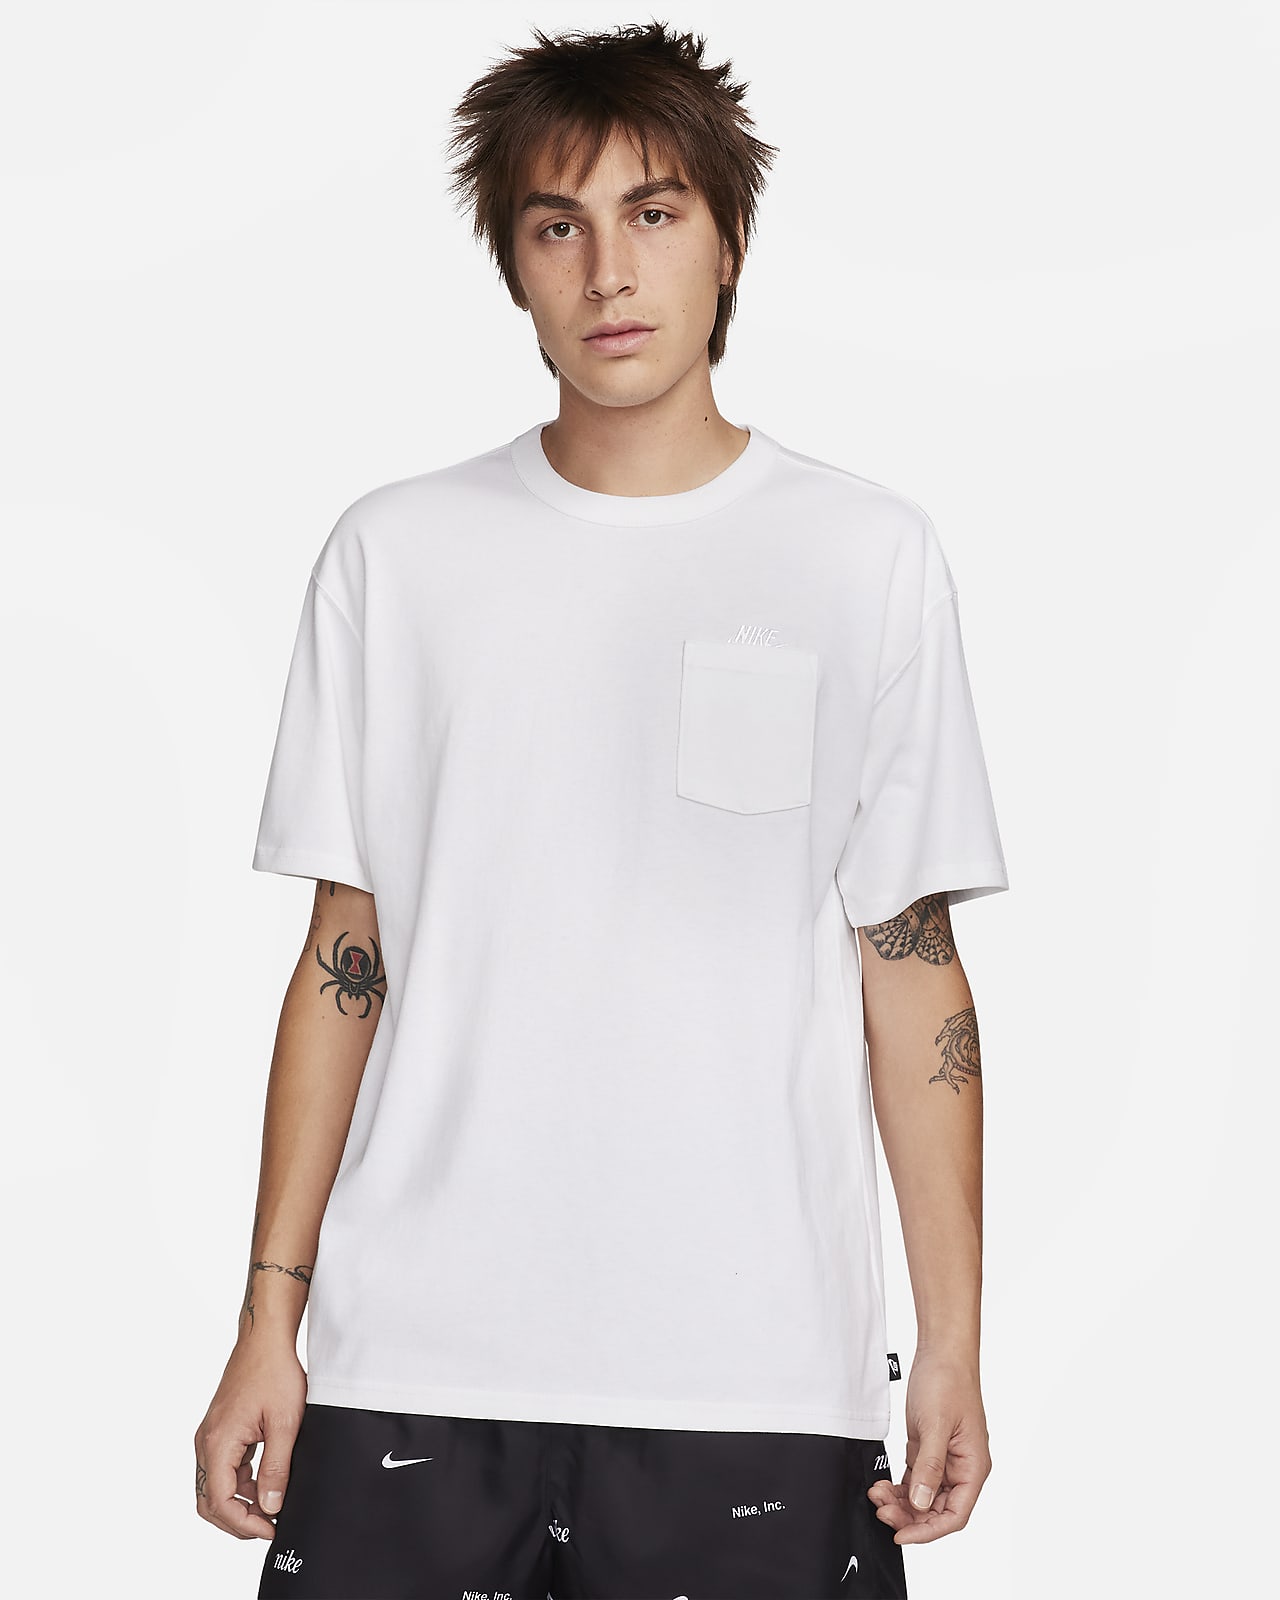 Nike Men's T-Shirt - Navy - L